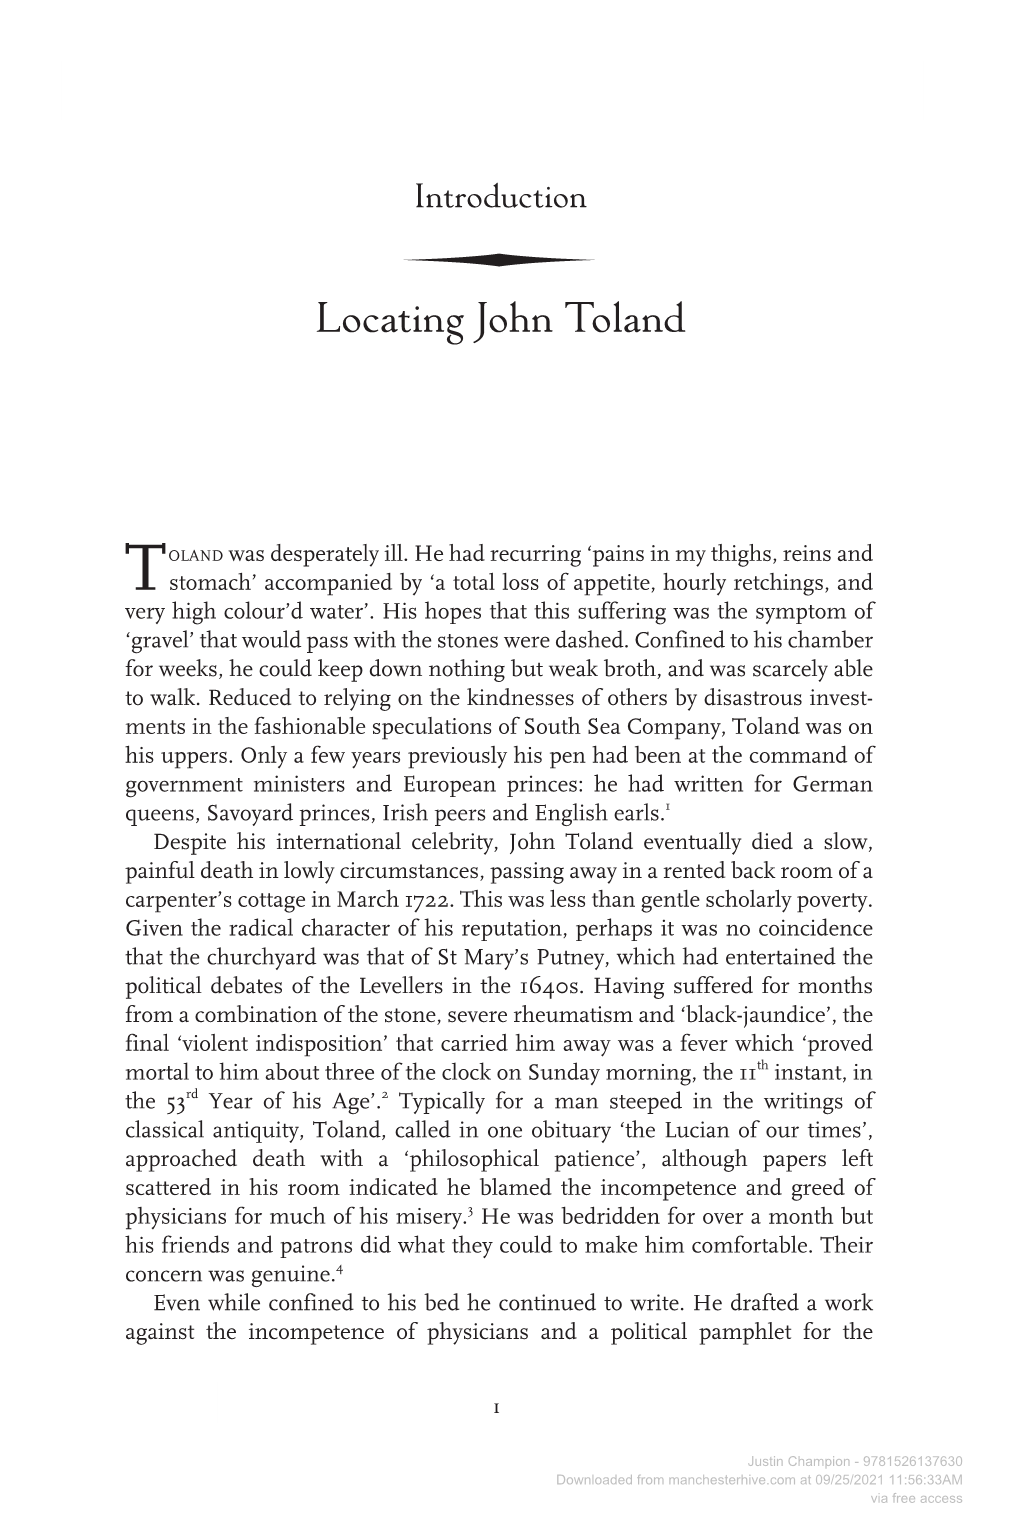 Locating John Toland